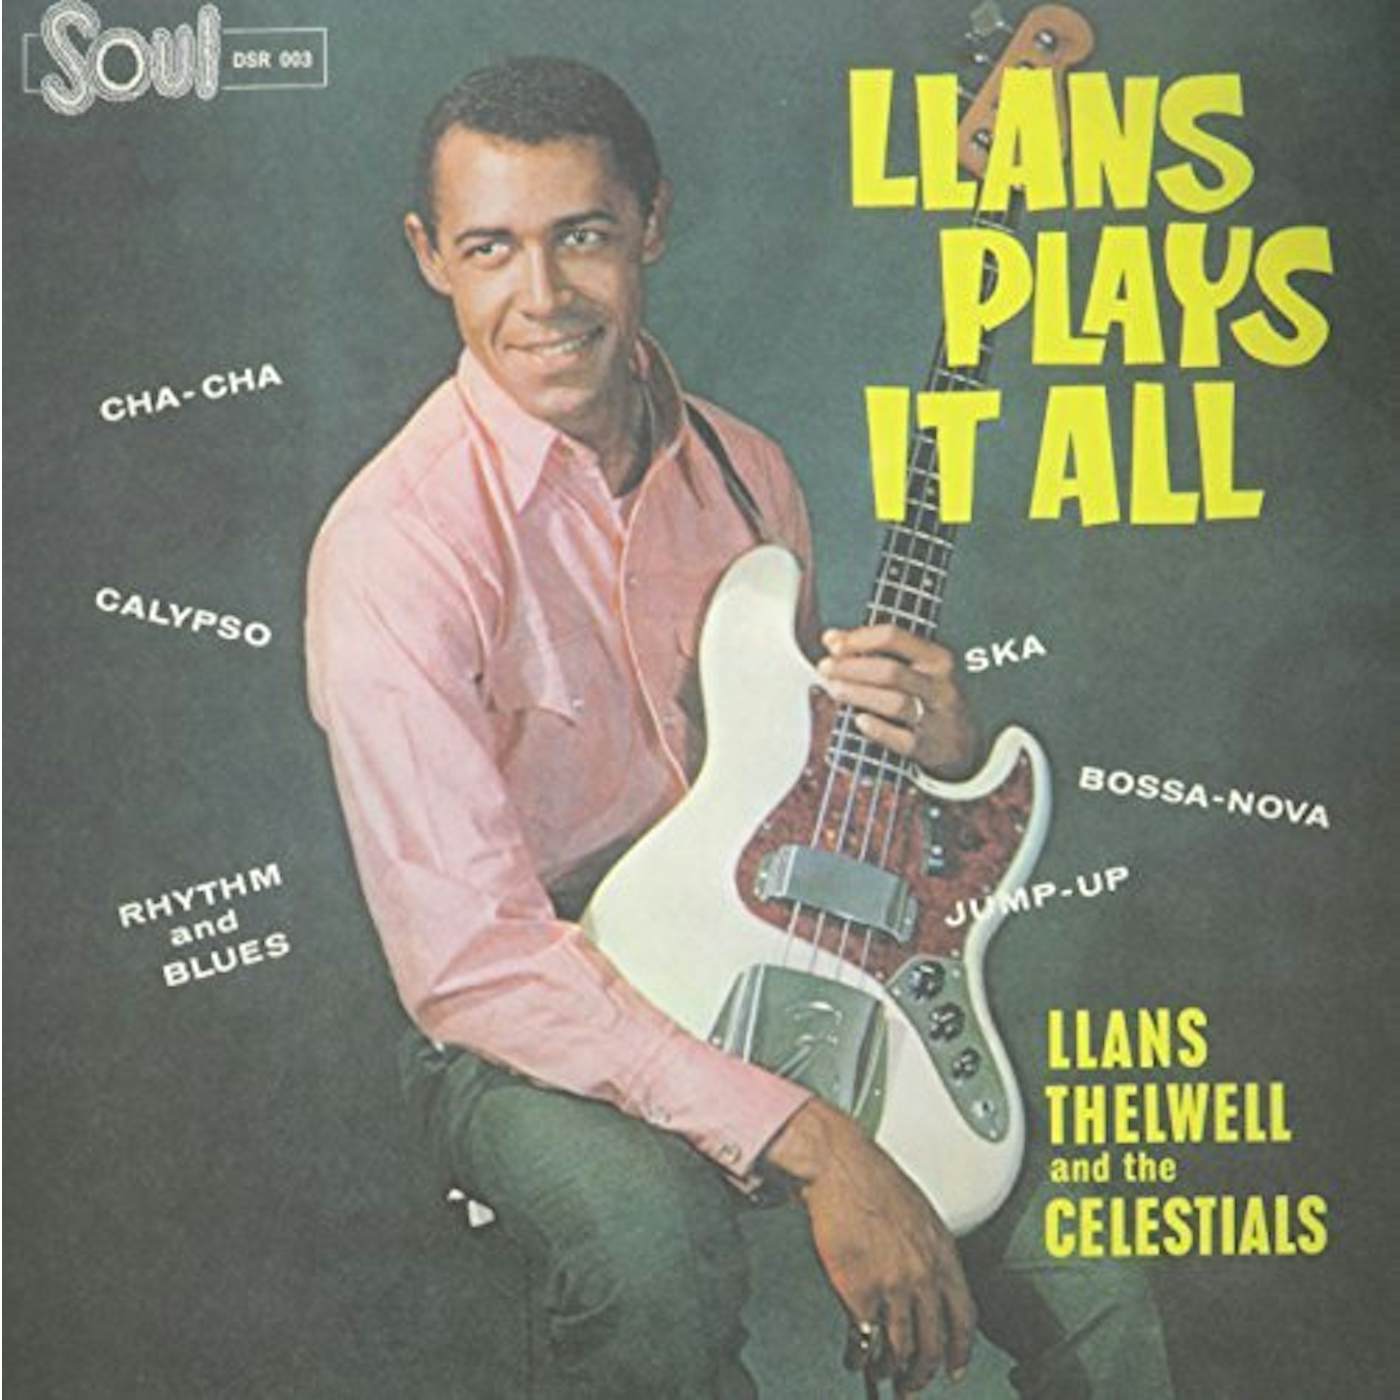 Llans Thelwell And His Celestials Llans Plays It All Vinyl Record